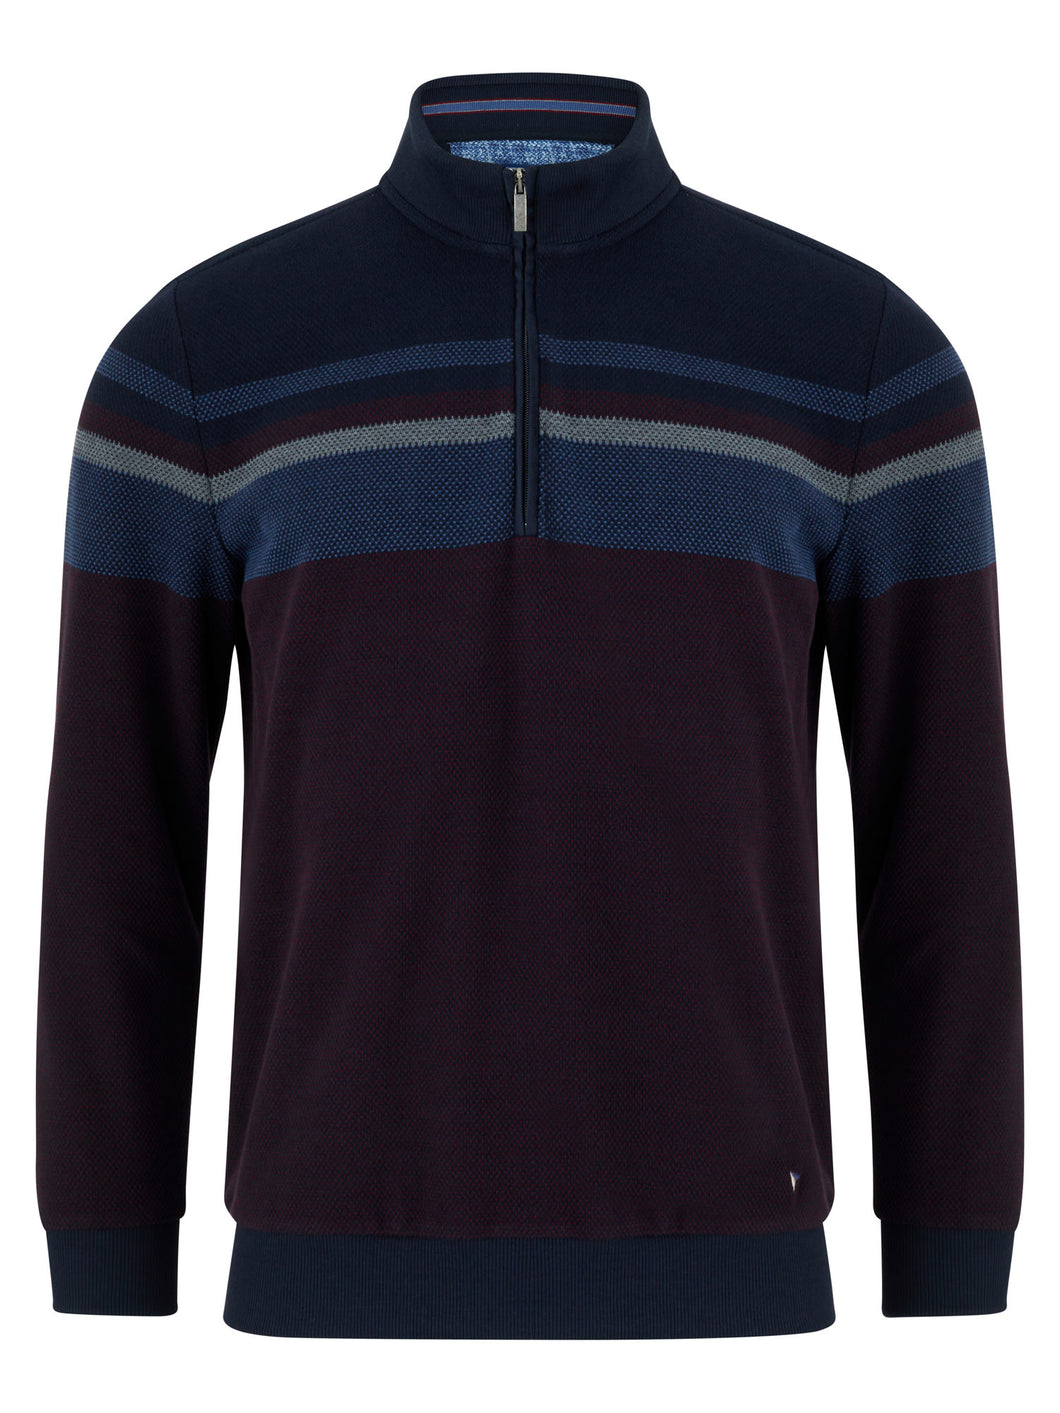 Daniel Grahame Dark Red Long Sleeve sweater 55152/HZ 68 Burgundy